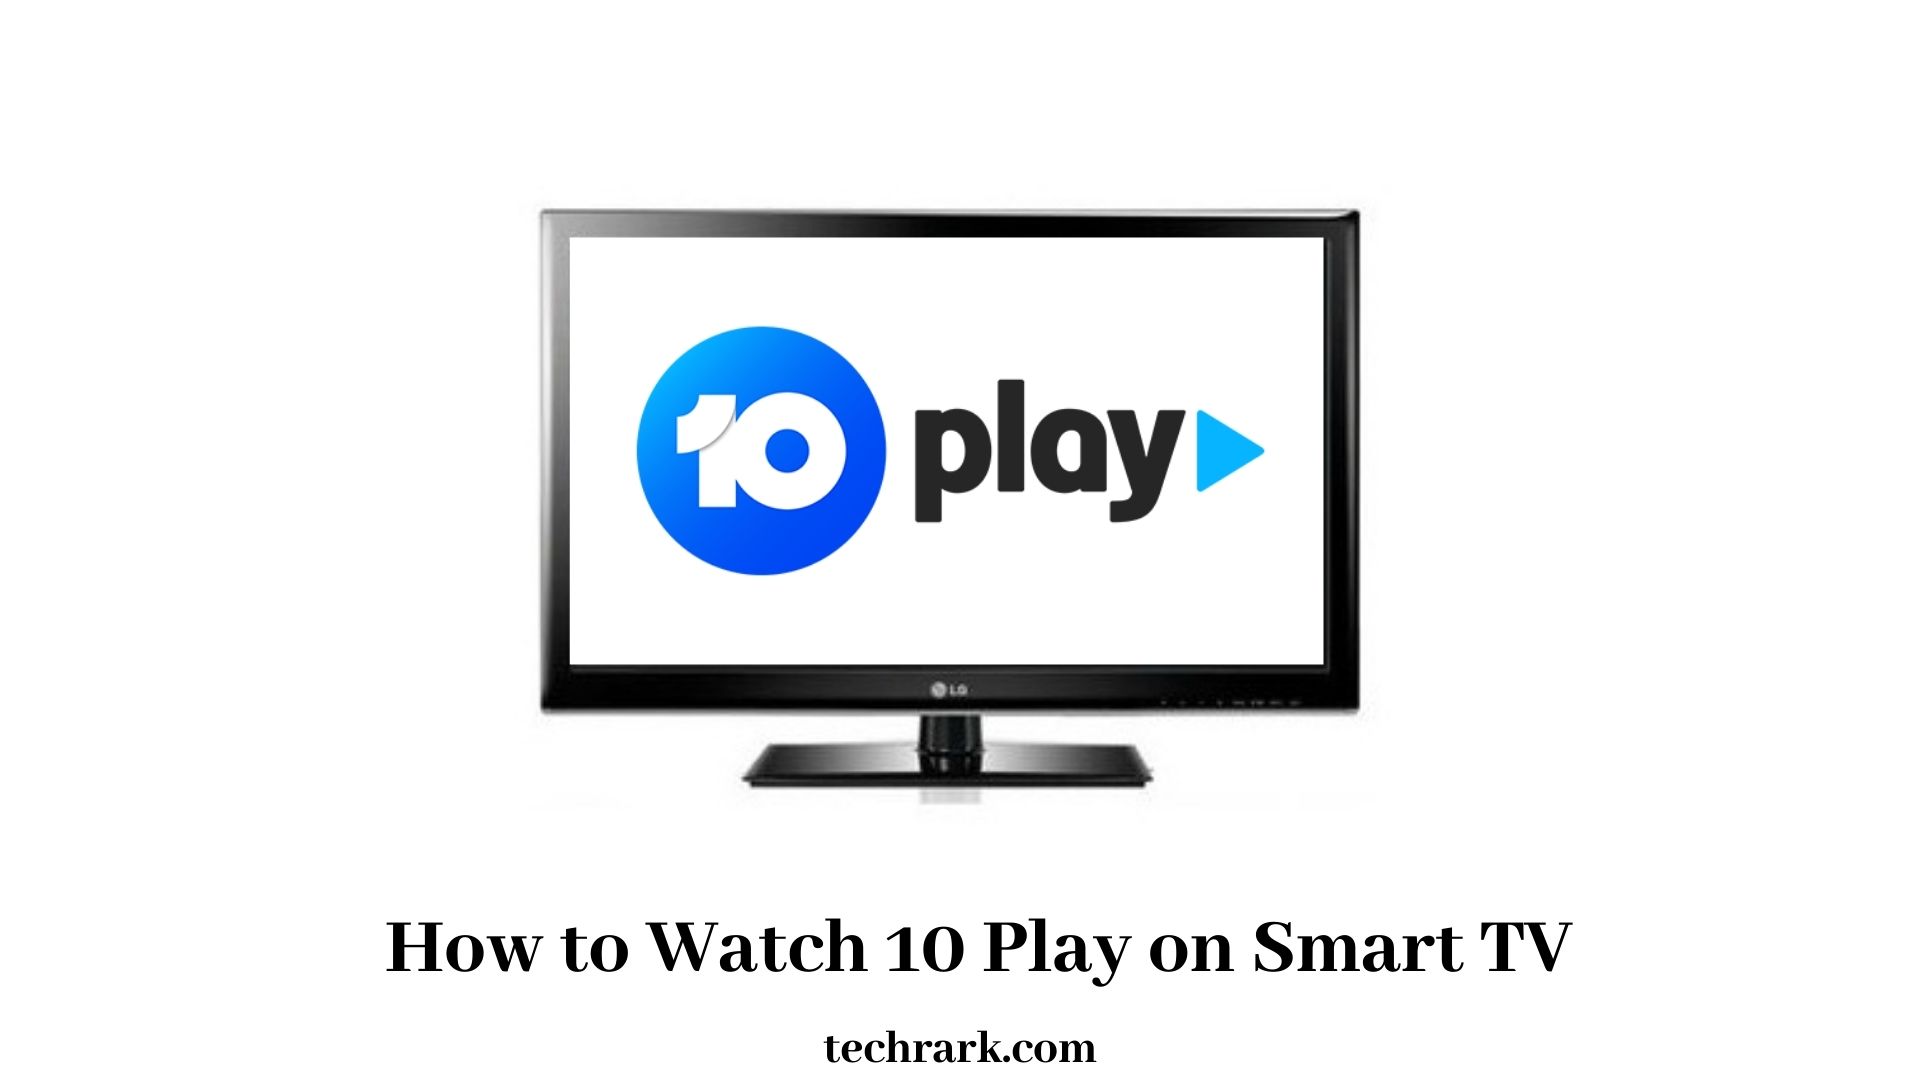 10 Play on Smart TV